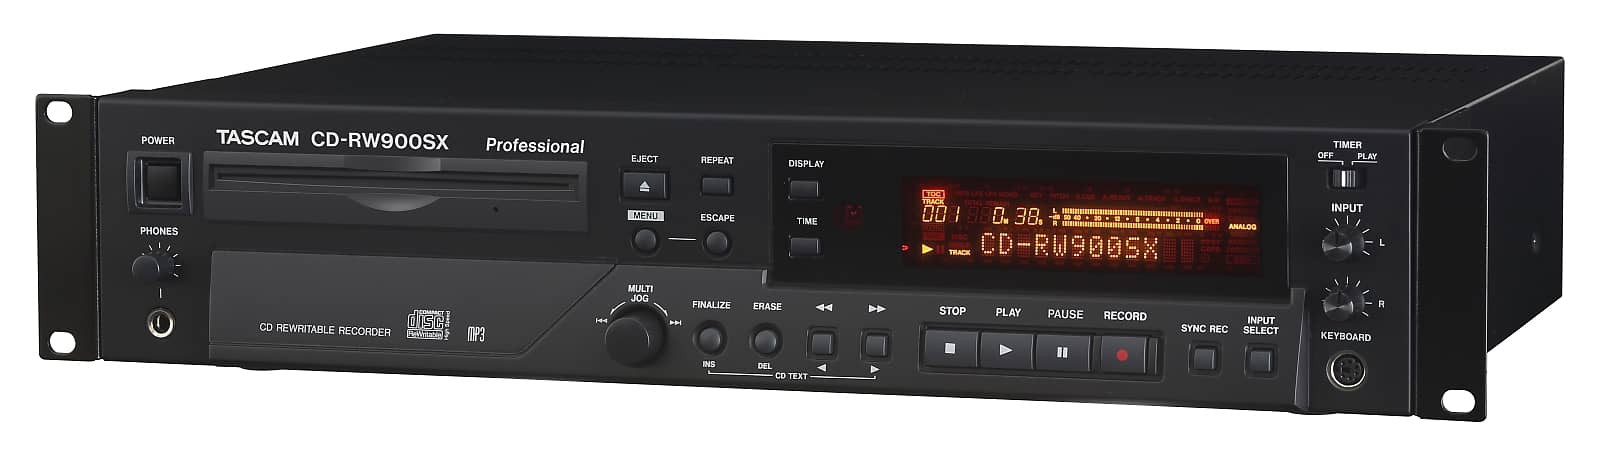 Galerijní obrázek č.2 Stereo rekordery (stolní/rackové) TASCAM CD-RW900SX